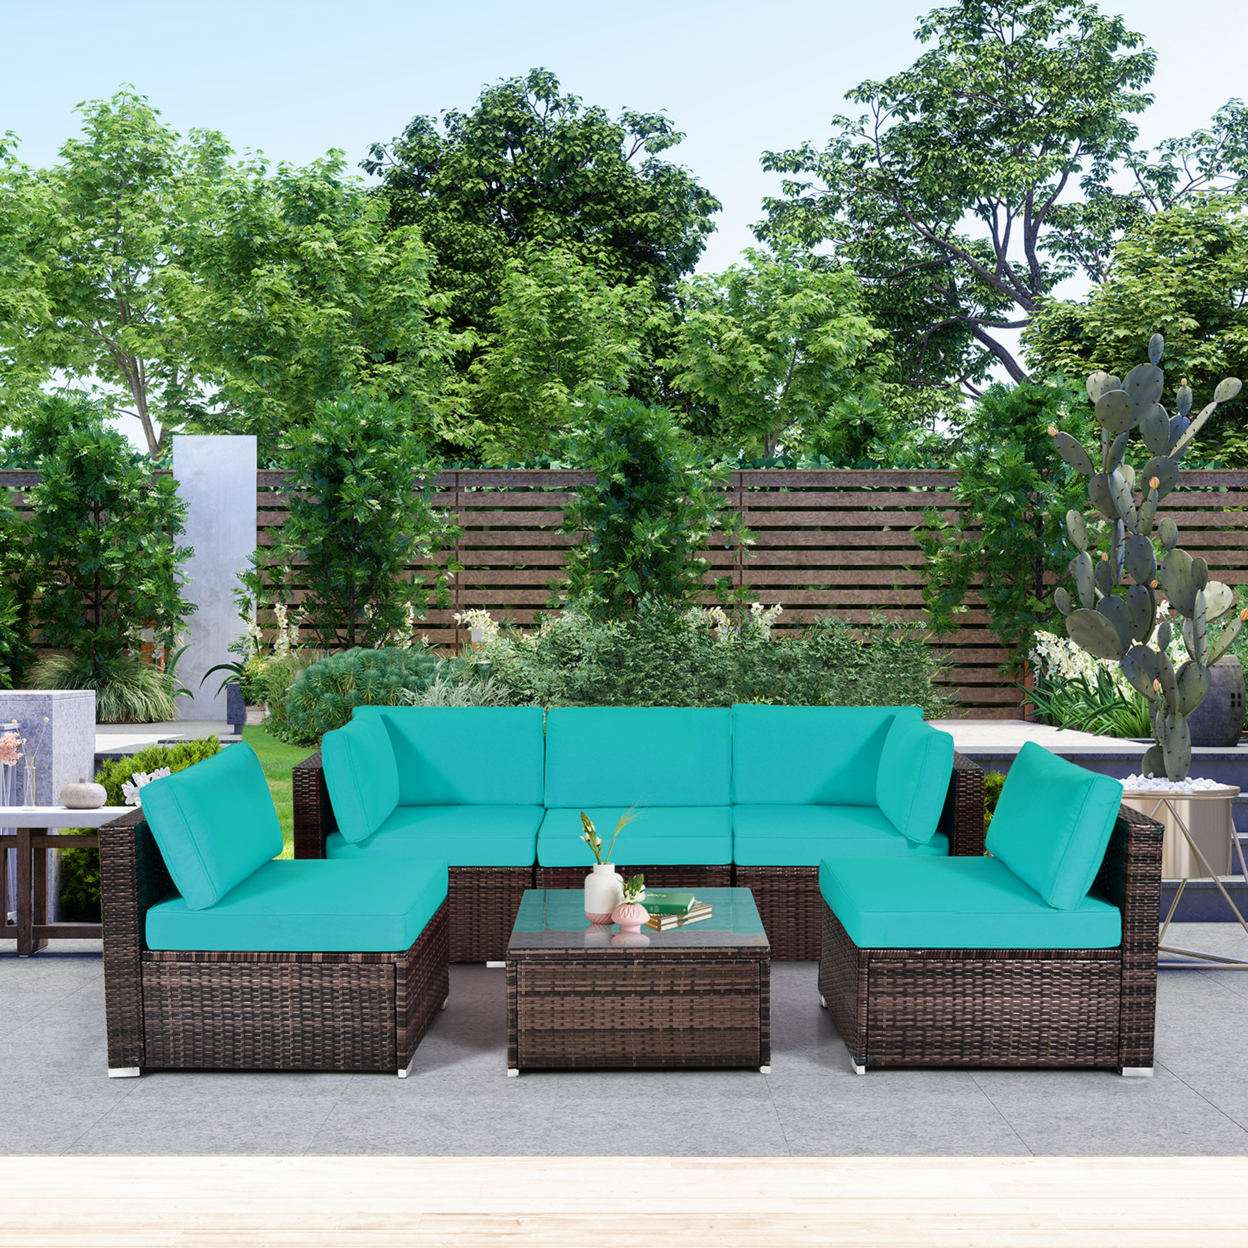 6PCS Rattan Outdoor Sectional Sofa Set Patio Furniture Set W/ Turquoise Cushions